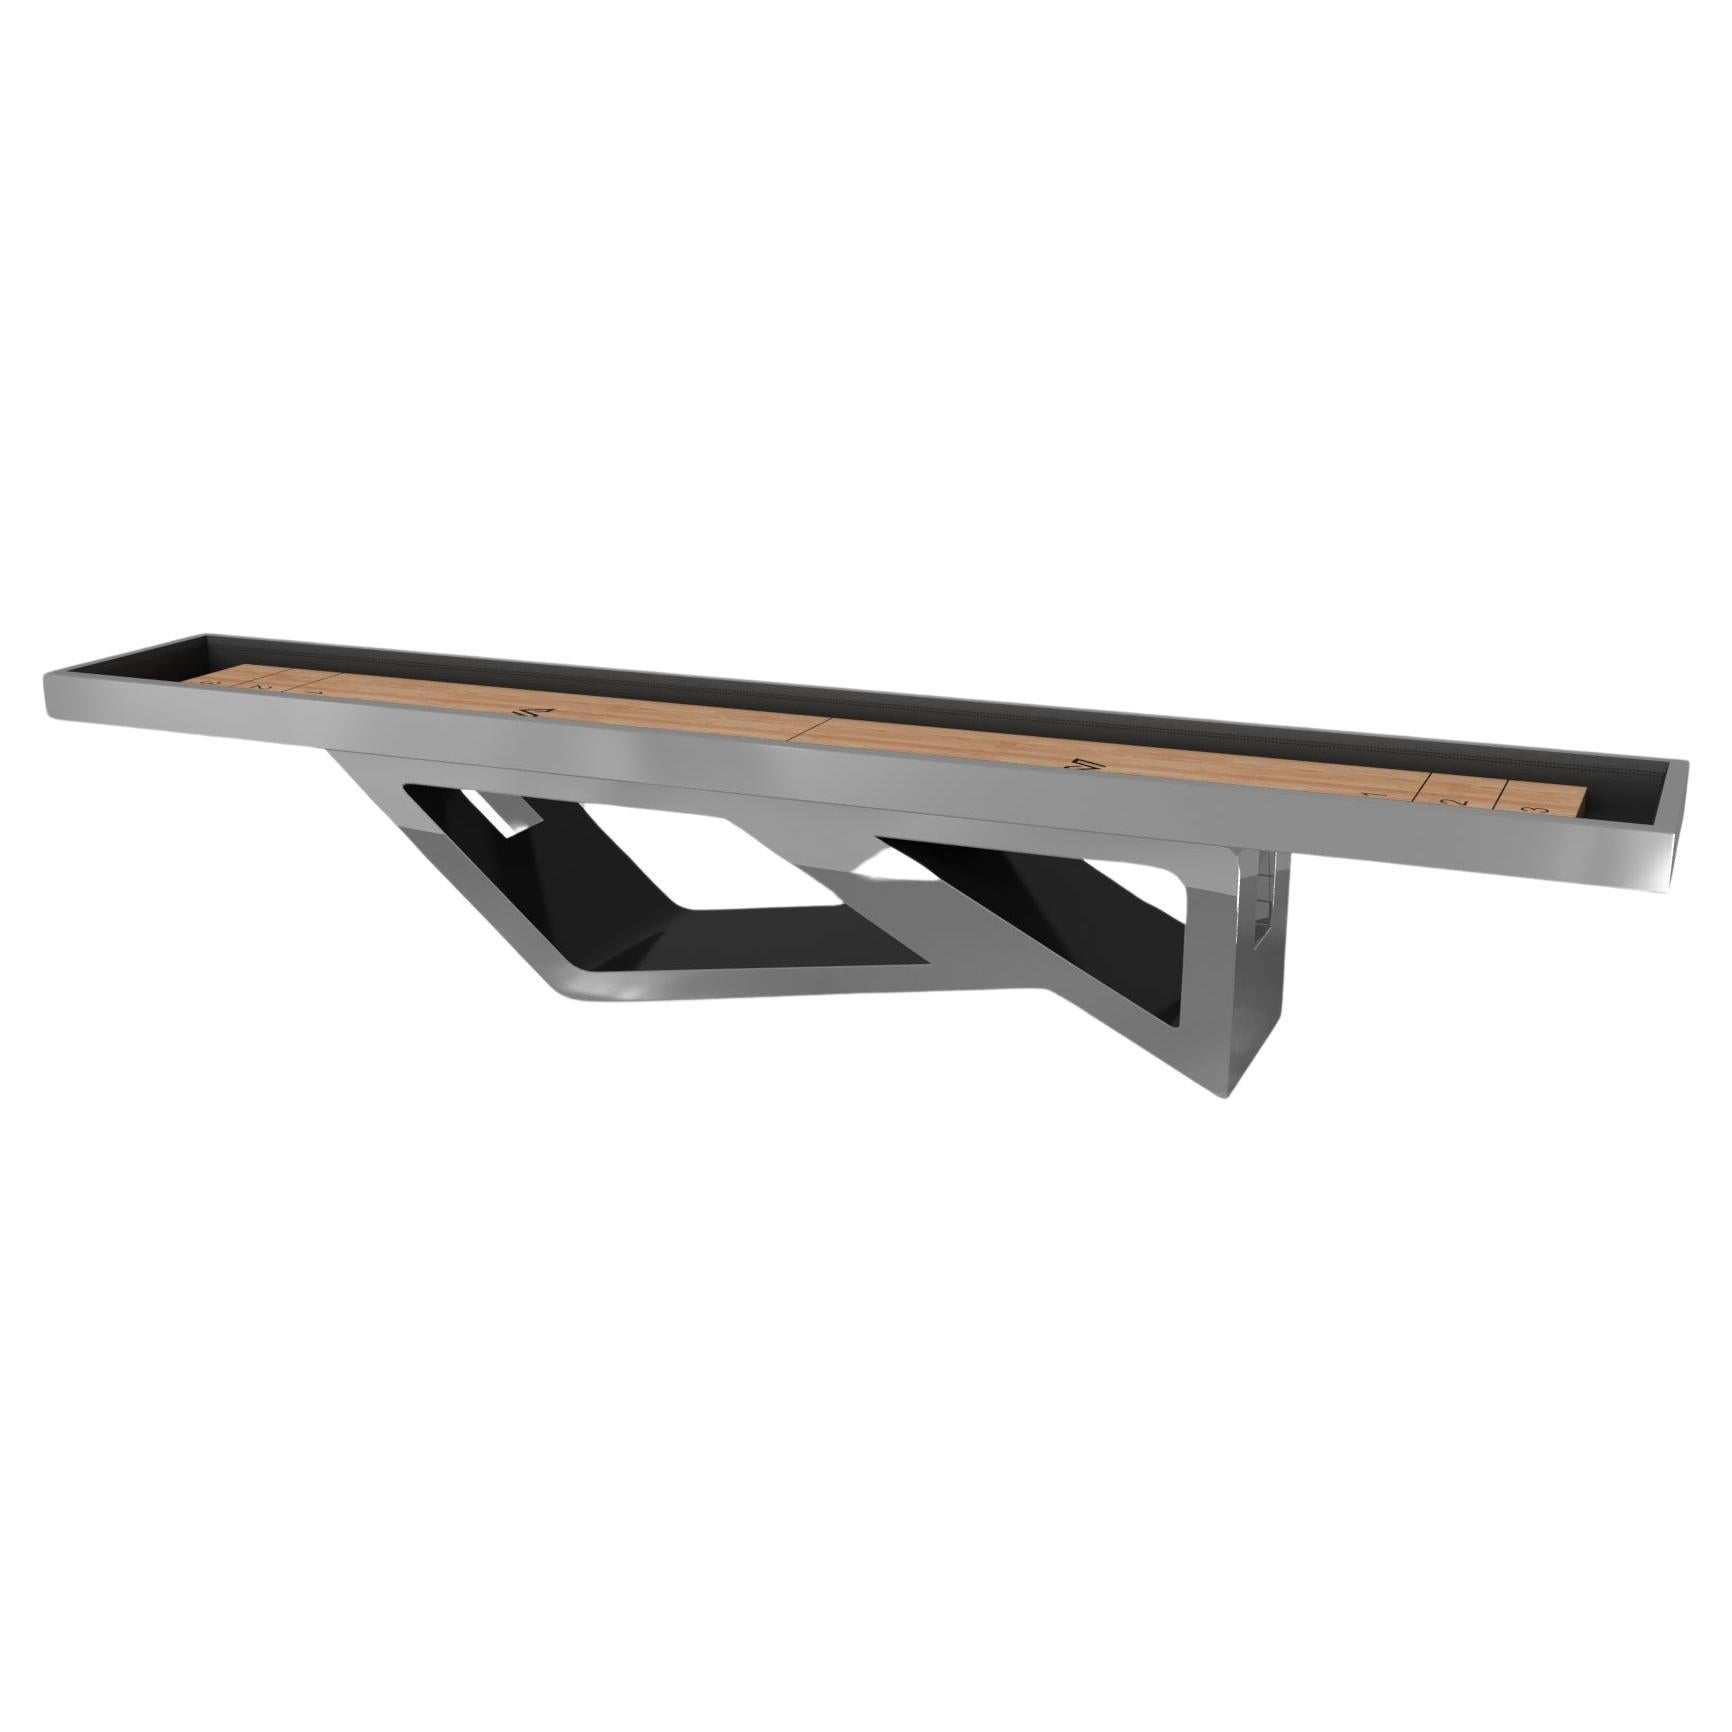 Elevate Customs Rumba Shuffleboard Tables /Stainless Steel Sheet Metal in 9'-USA